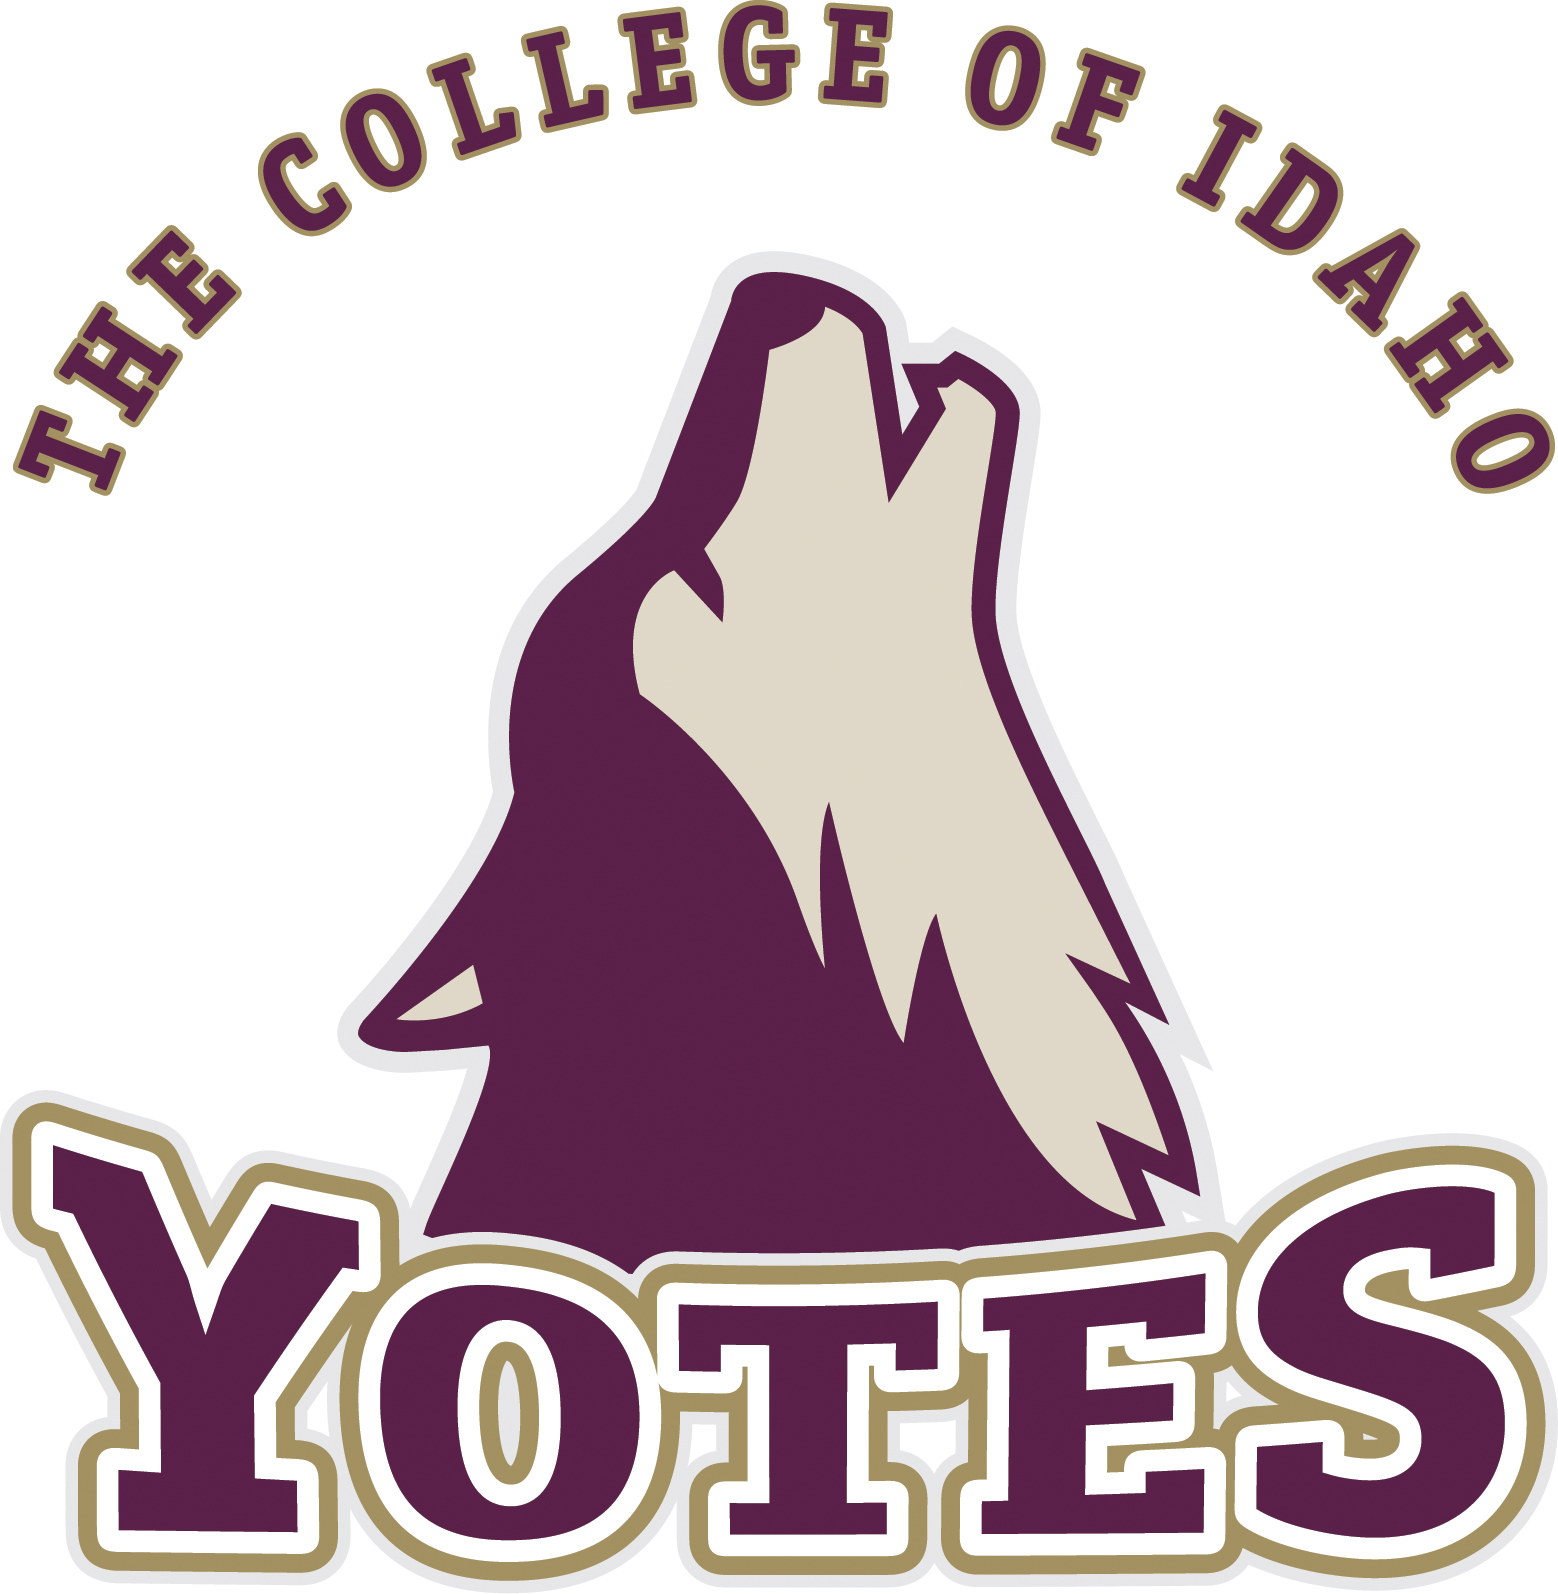 College of Idaho logo